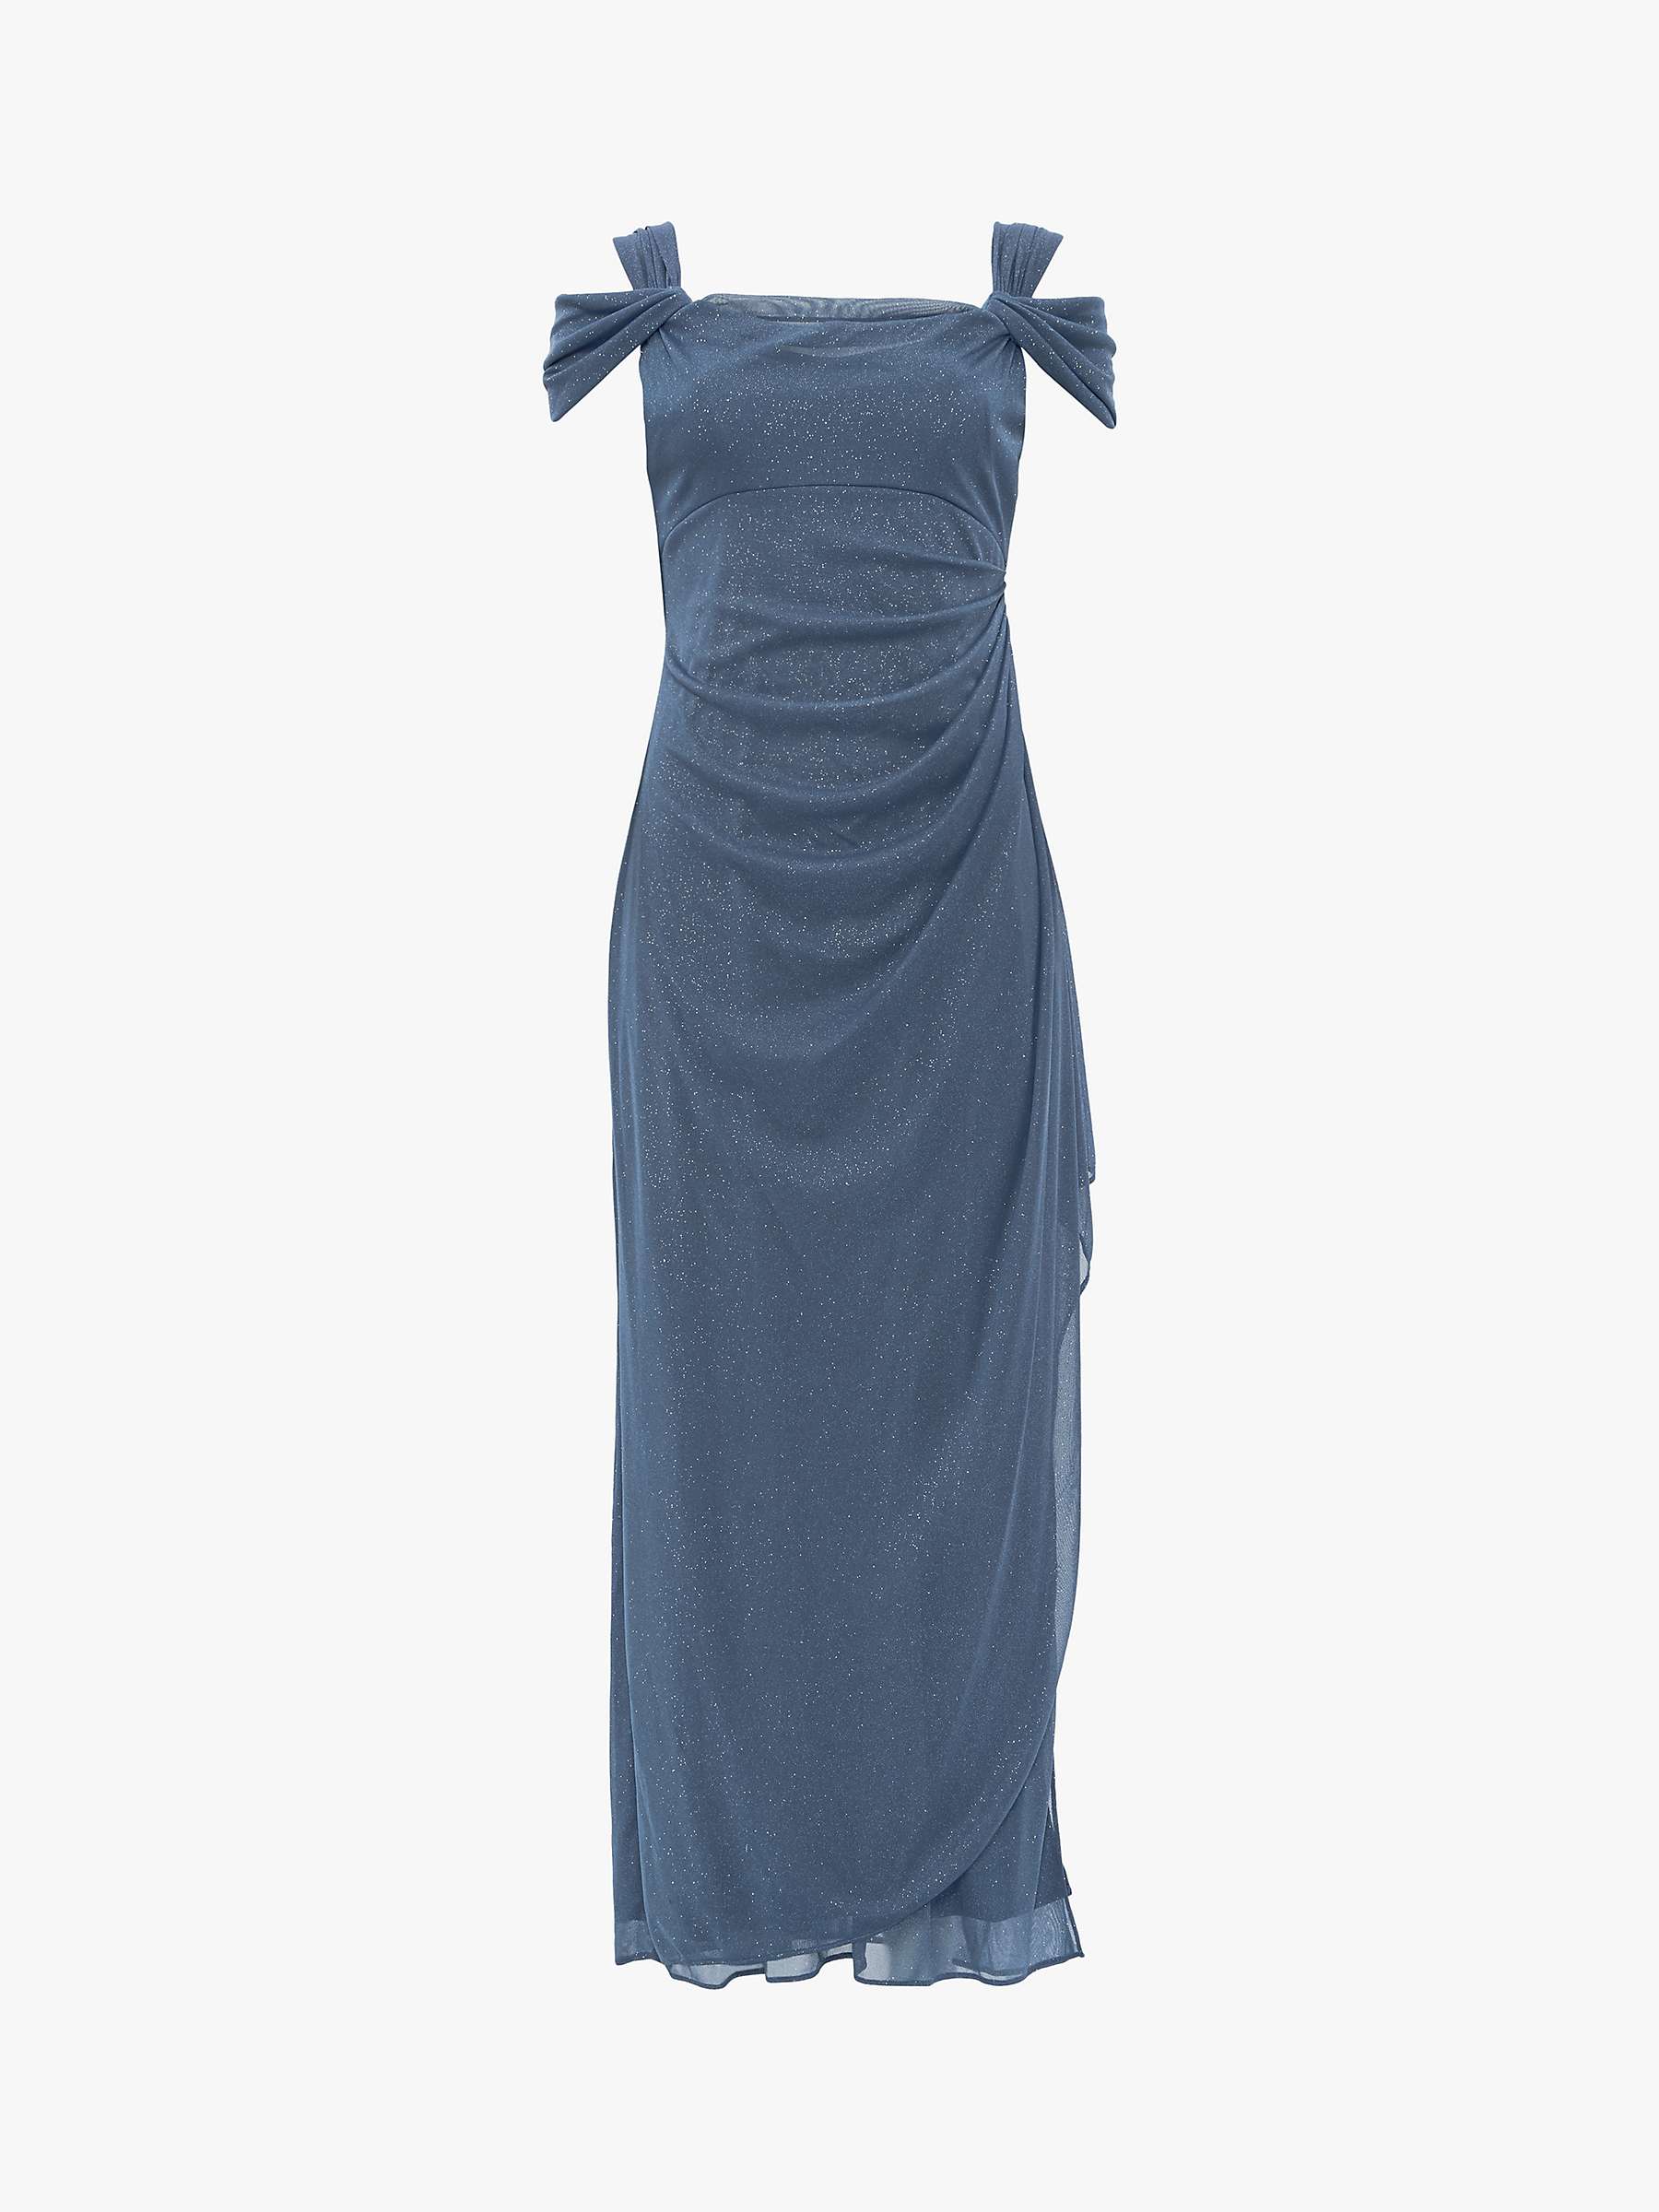 Buy Gina Bacconi Shree Cold Shoulder Maxi Dress Online at johnlewis.com